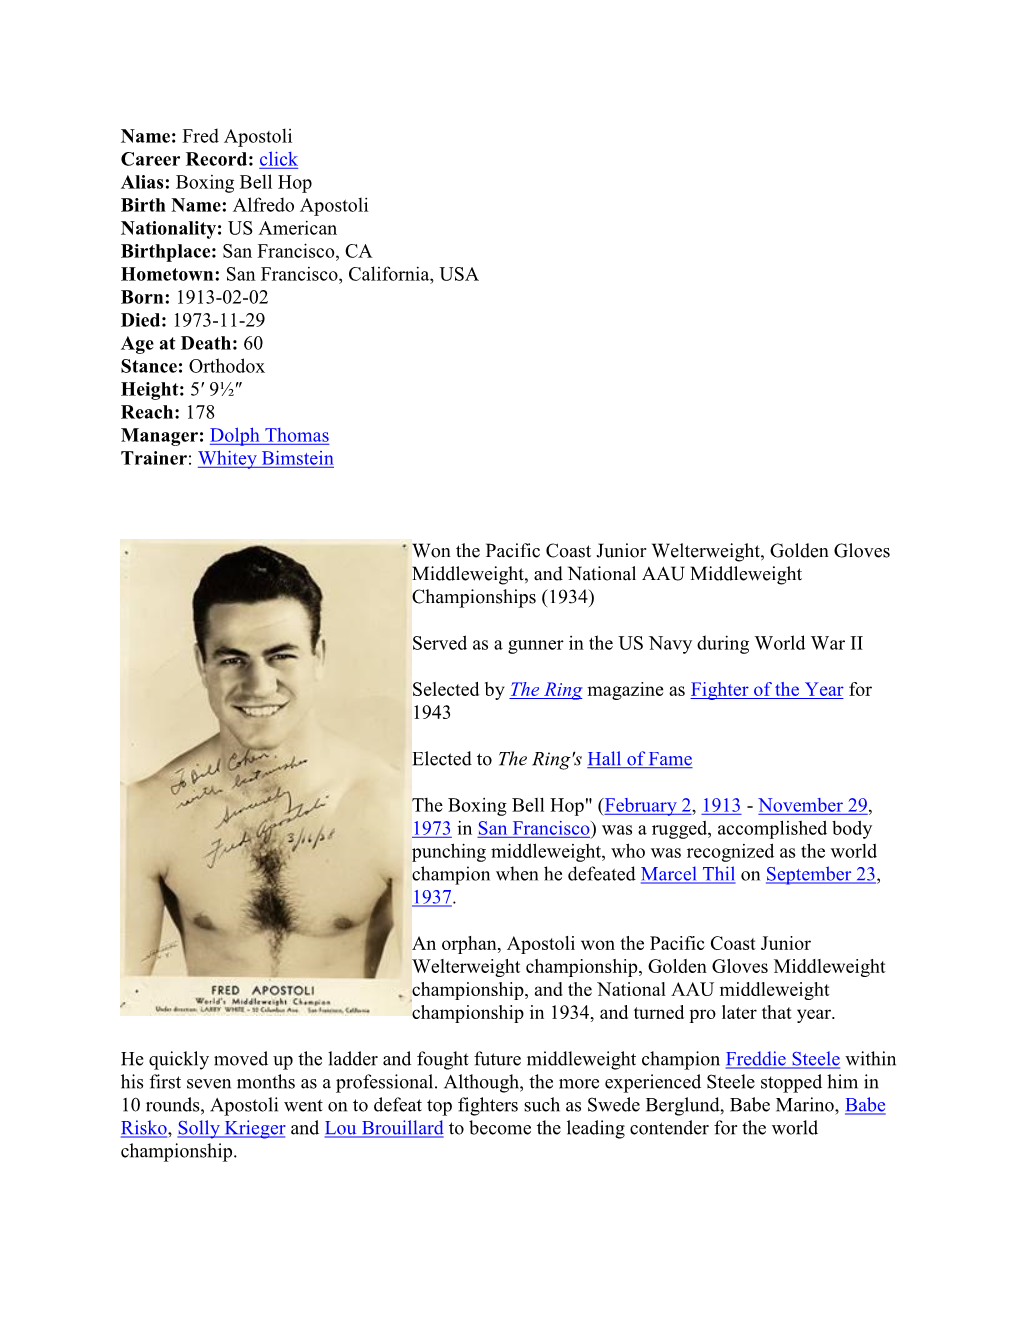 Name: Fred Apostoli Career Record: Click Alias: Boxing Bell Hop Birth